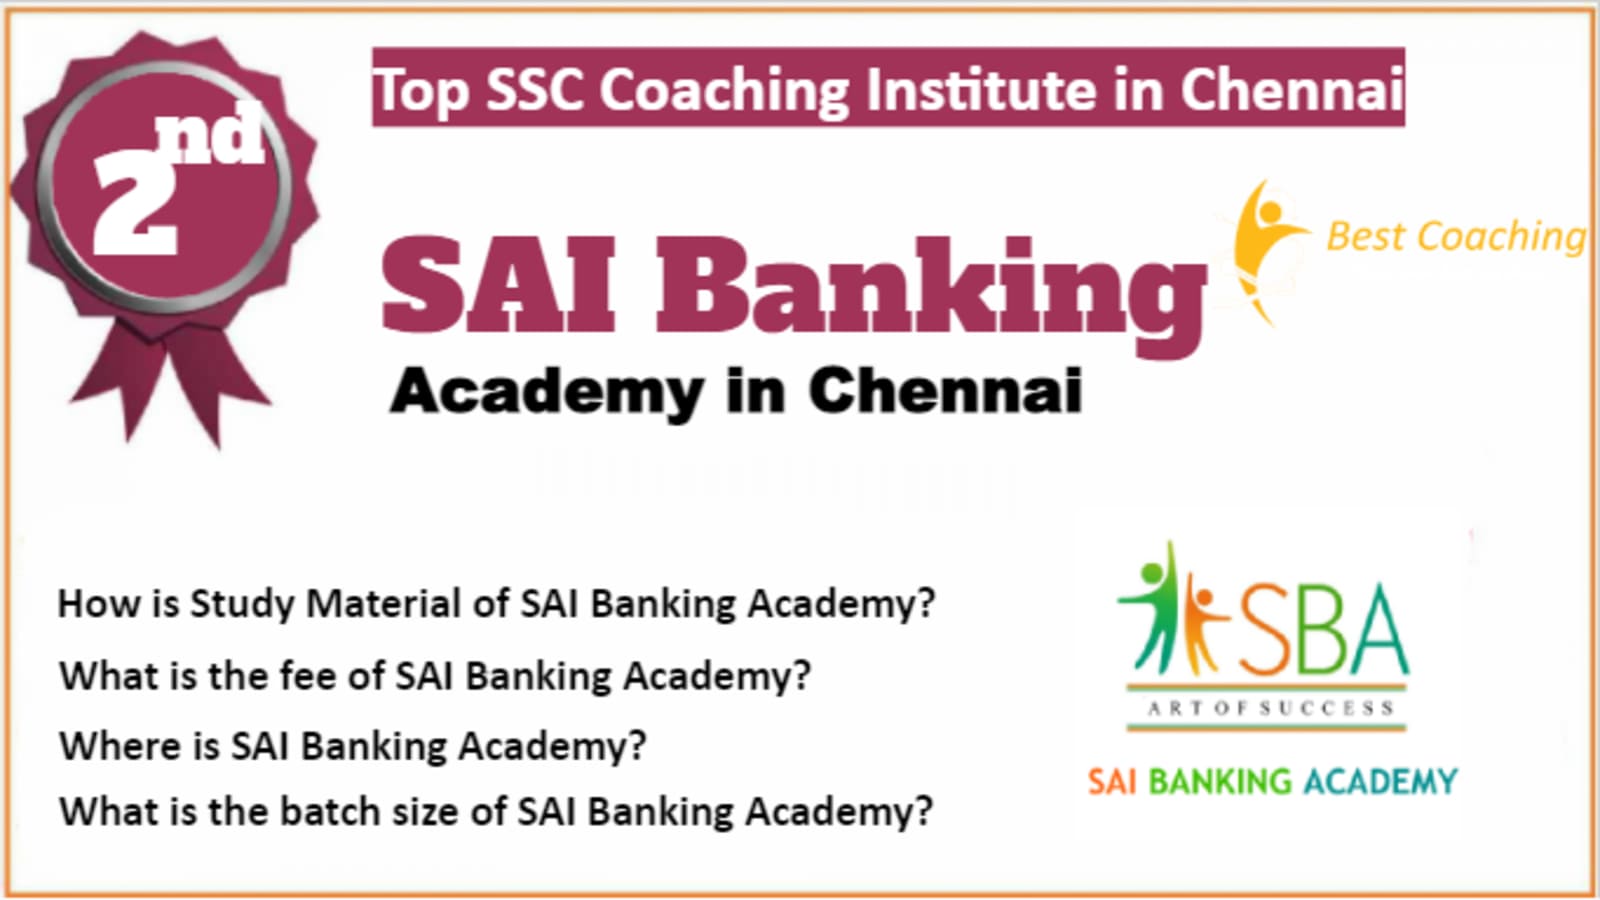 Rank 2 Best SSC Coaching in Chennai